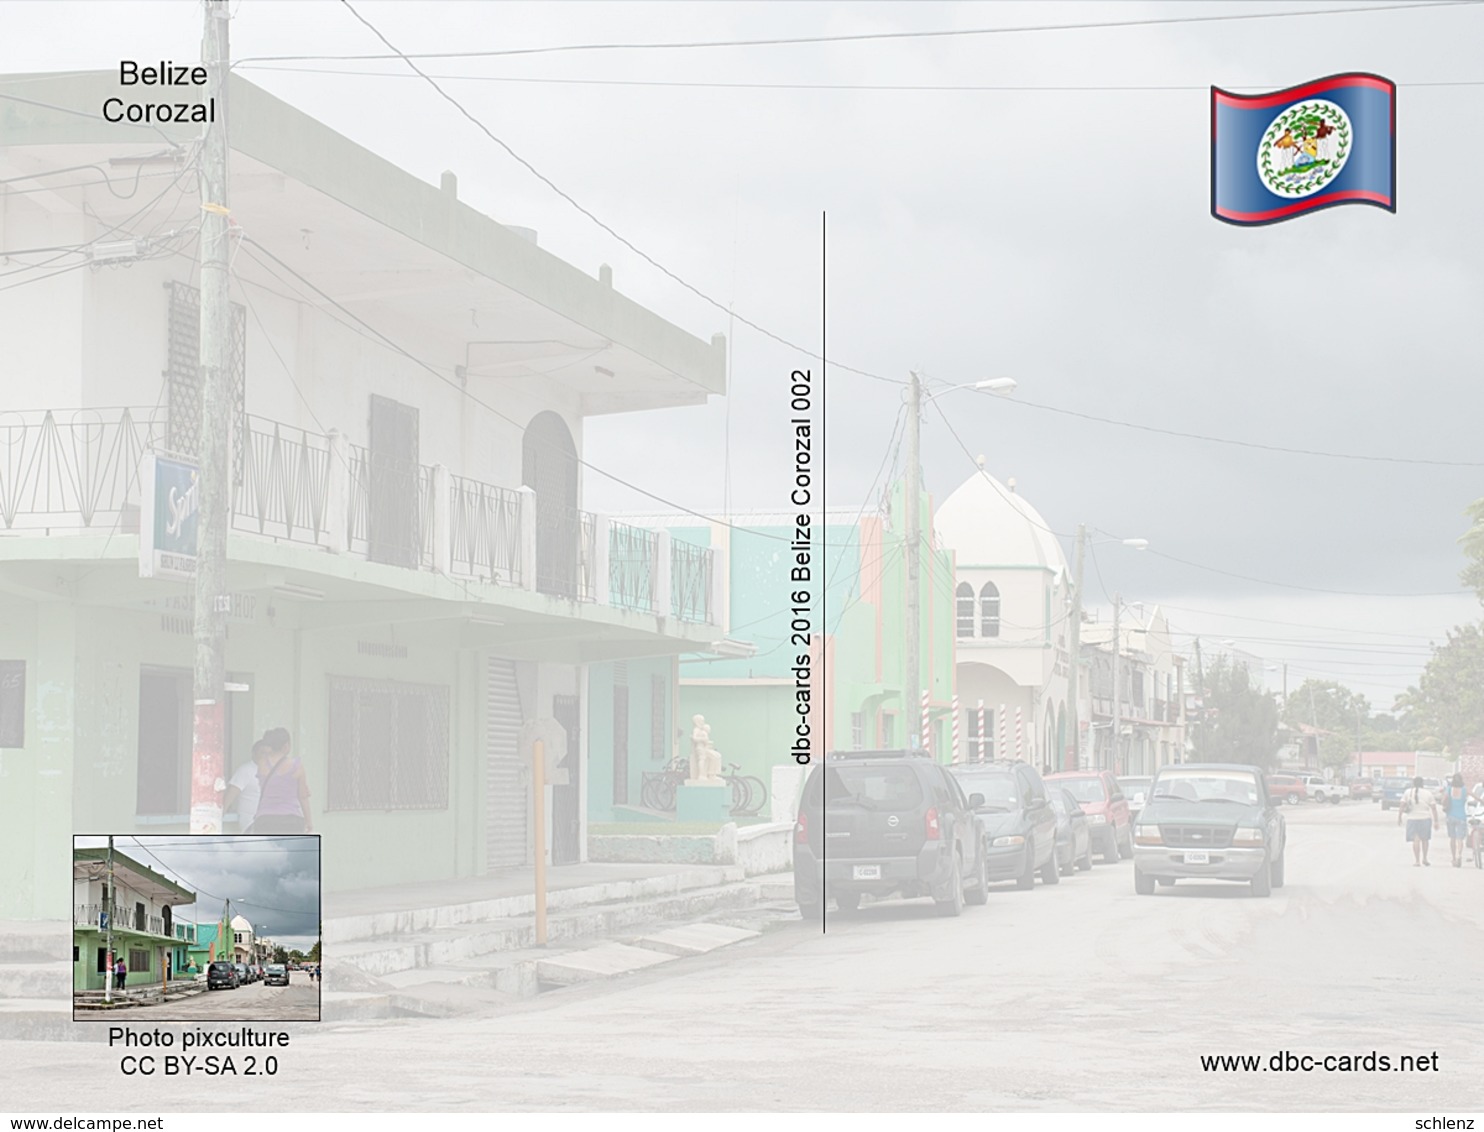 Corozal Belize 2 - Belize